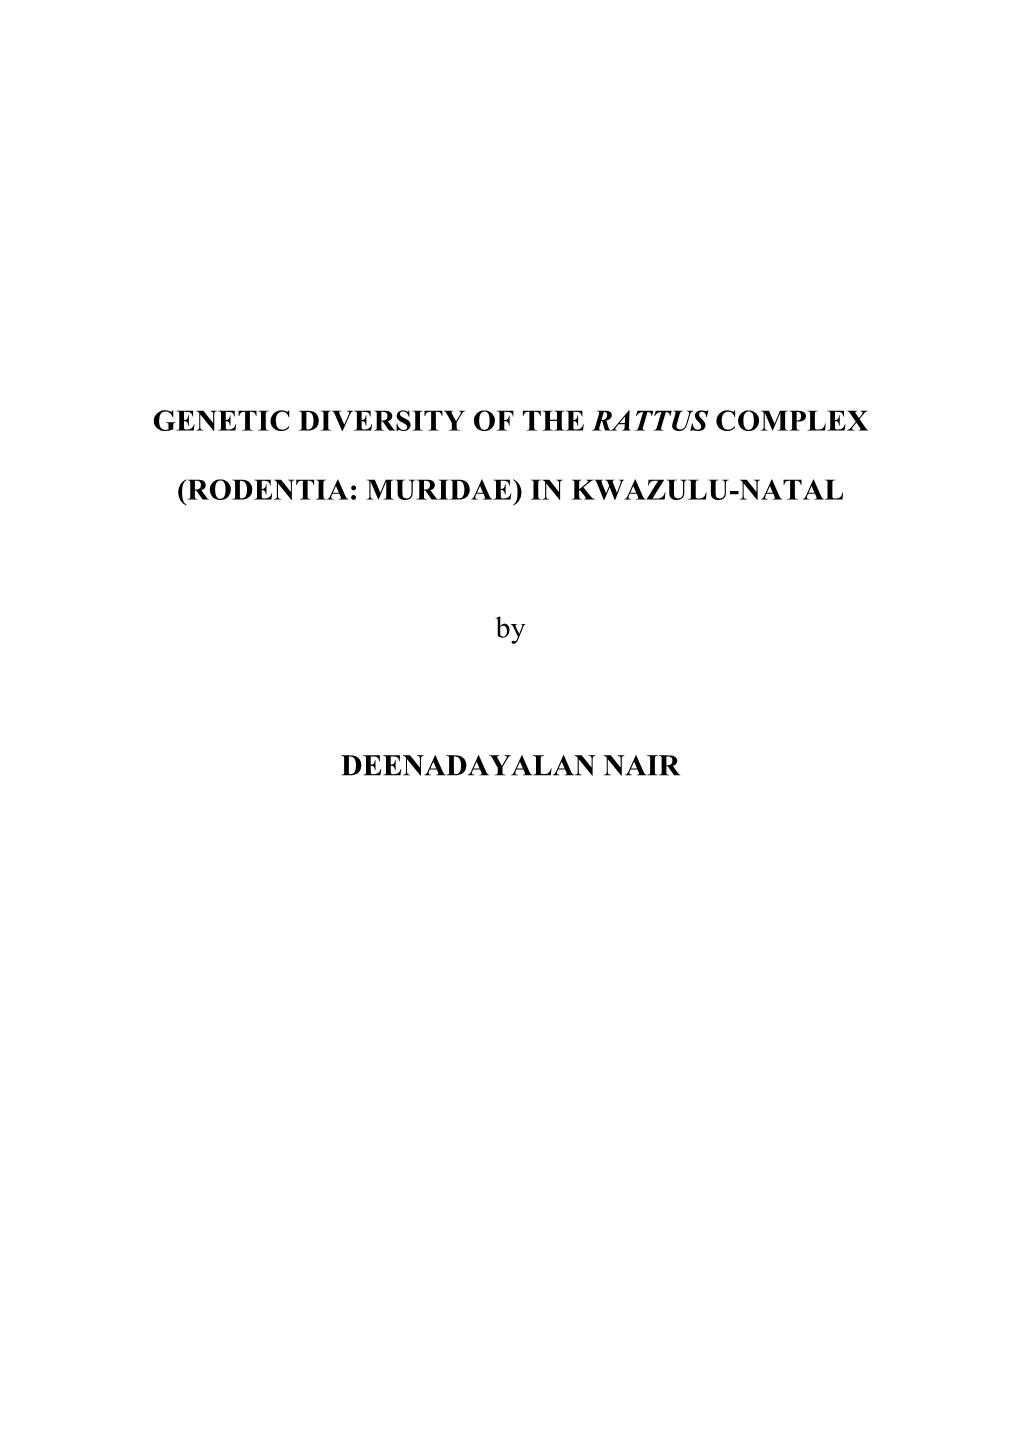 GENETIC DIVERSITY of the RATTUS COMPLEX (RODENTIA: MURIDAE) in KWAZULU-NATAL by DEENADAYALAN NAIR